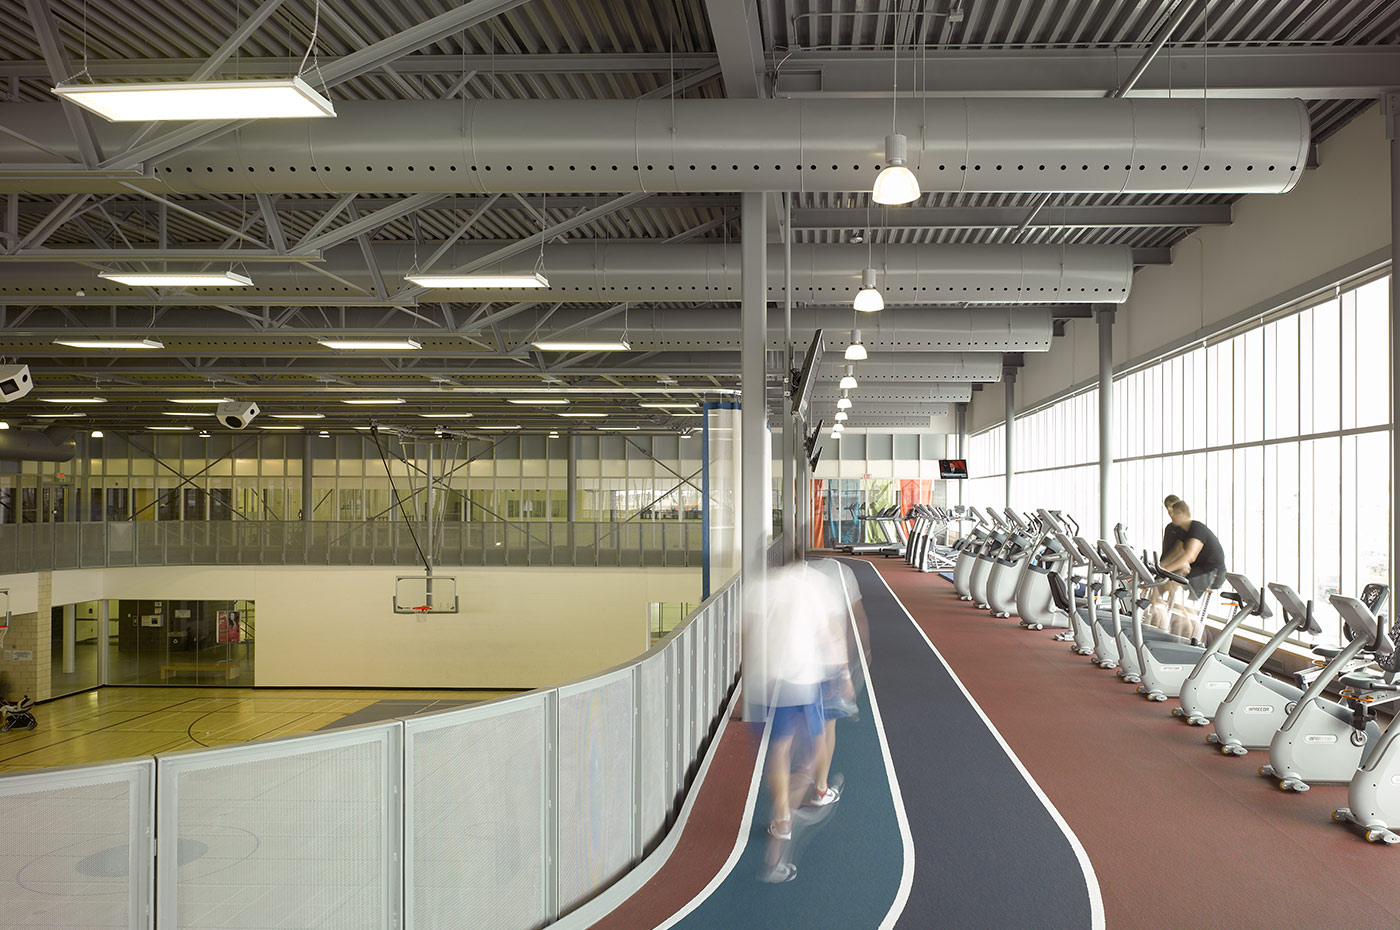 Bradford West Gwillimbury Leisure Centre Track and Gym